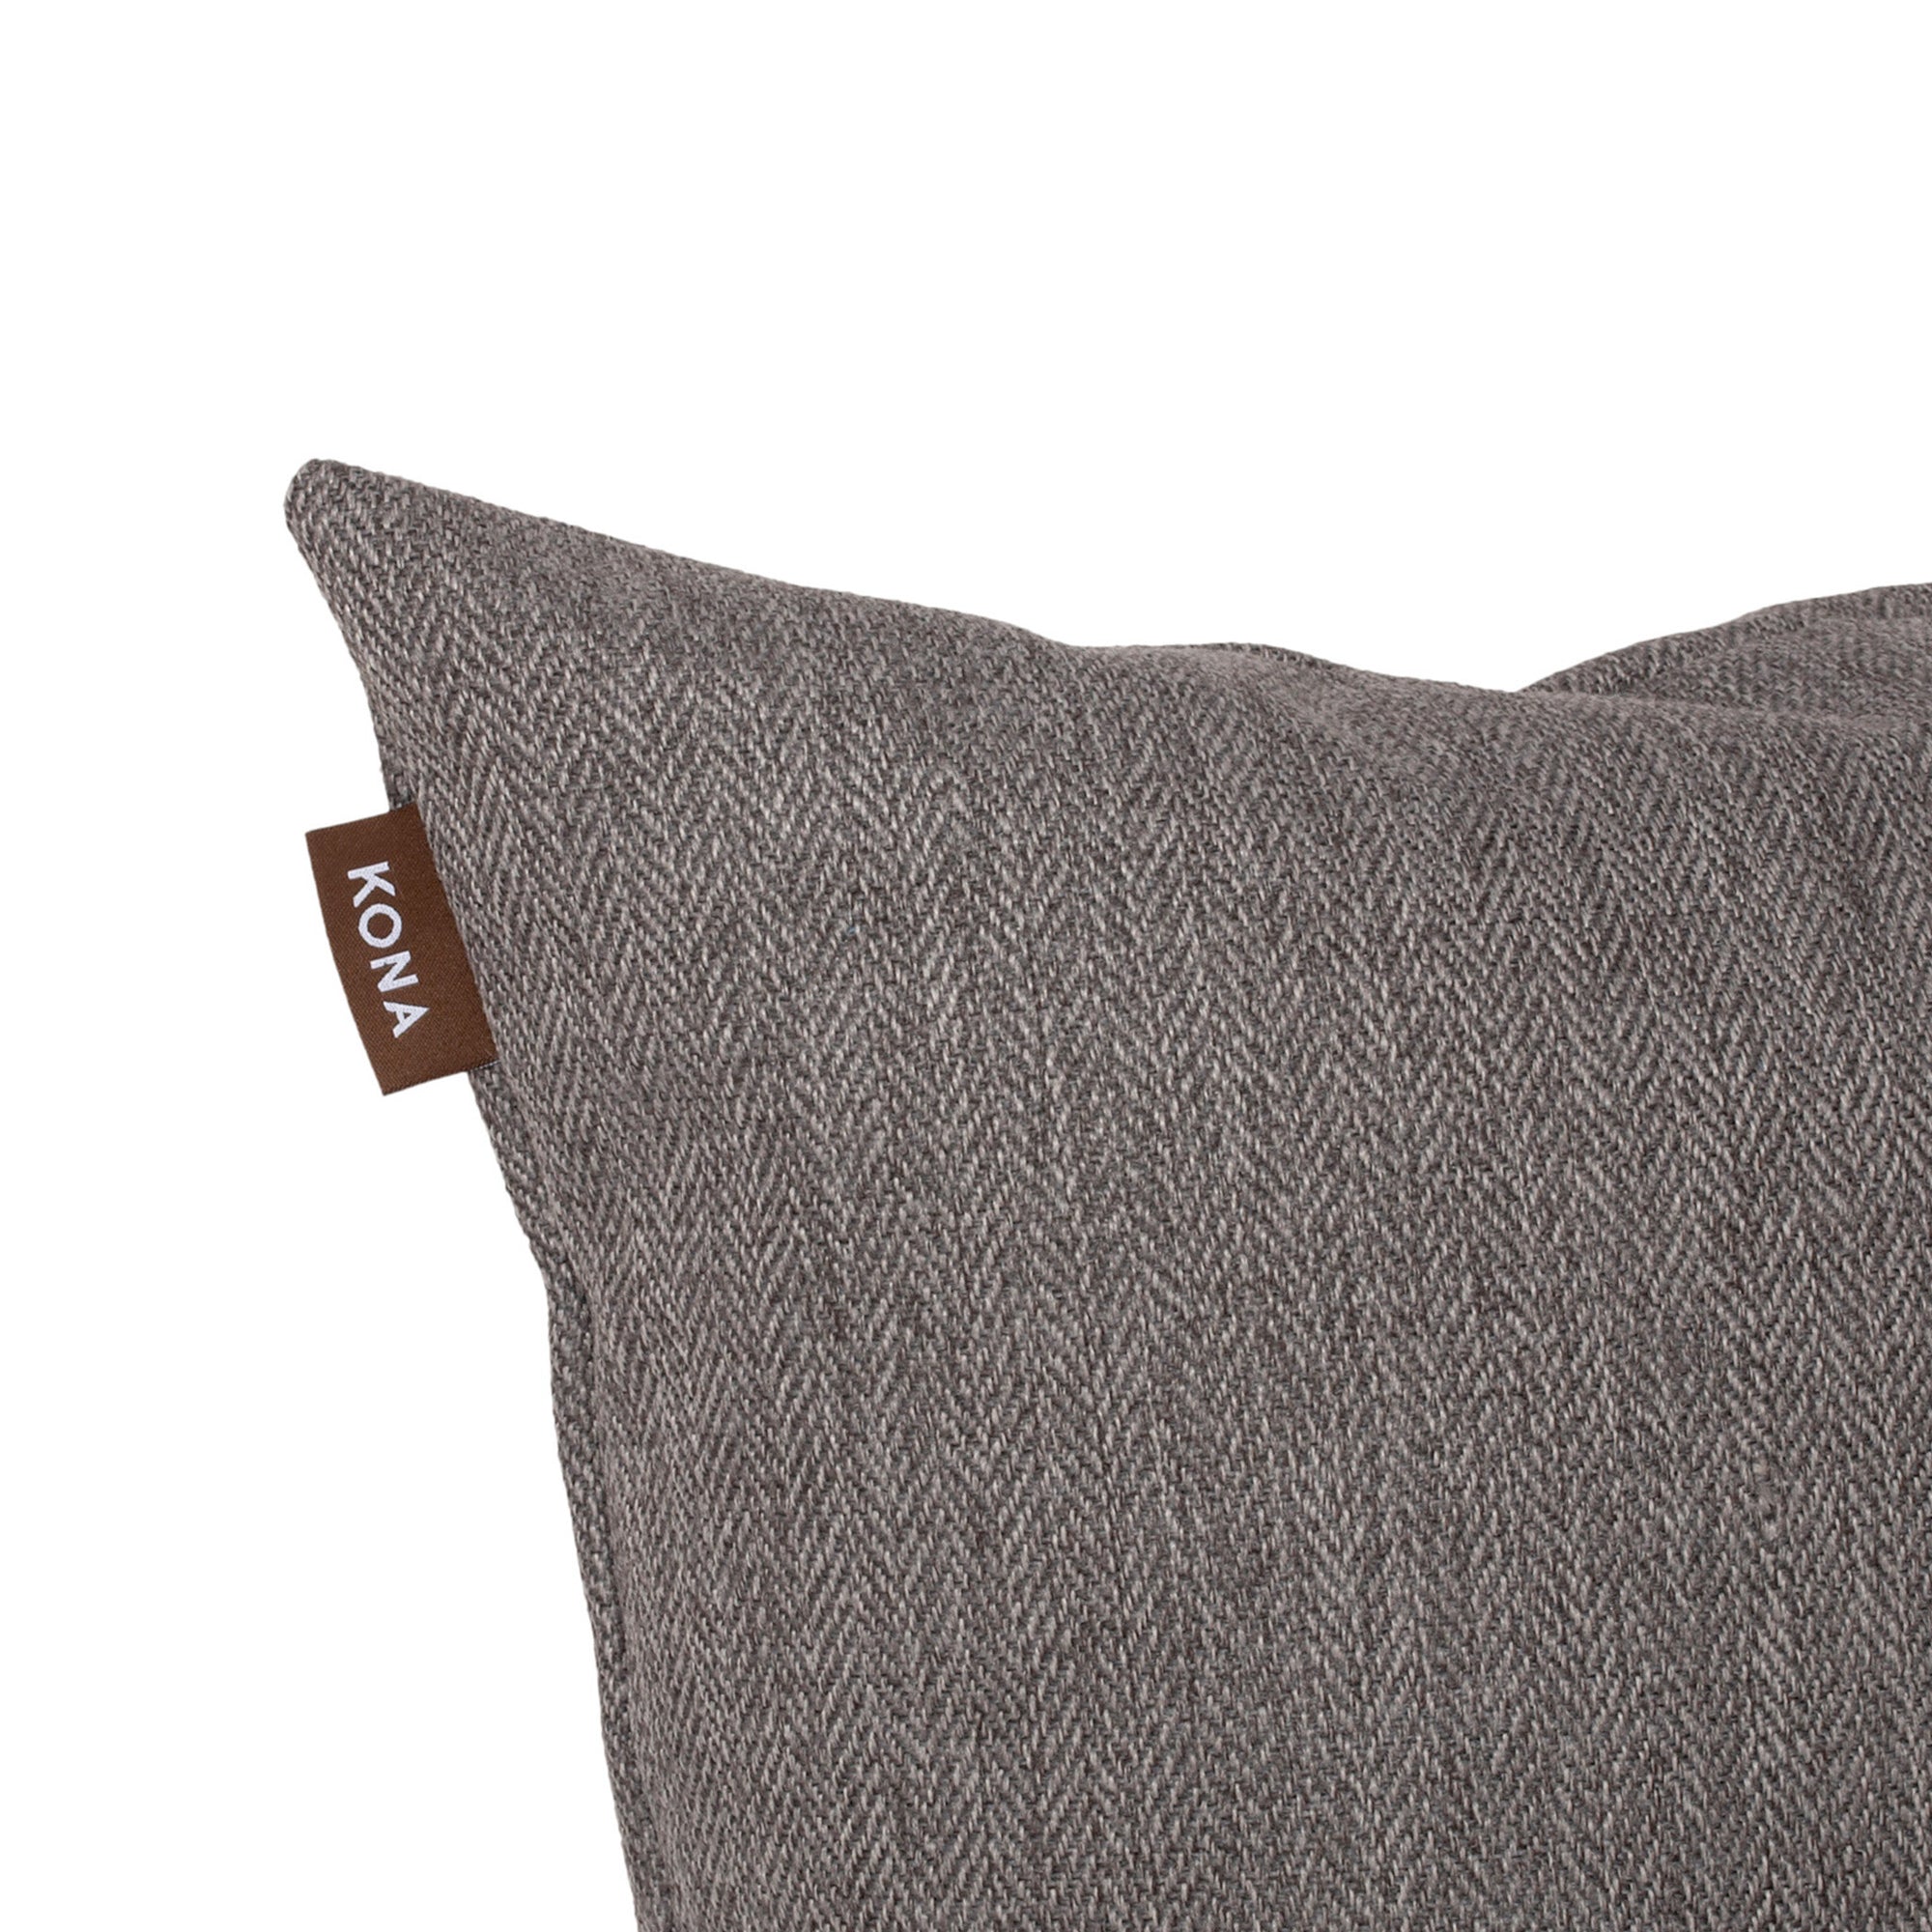 KONA CAVE® Decorative pillow covers, sophisticated grey herringbone fabric.